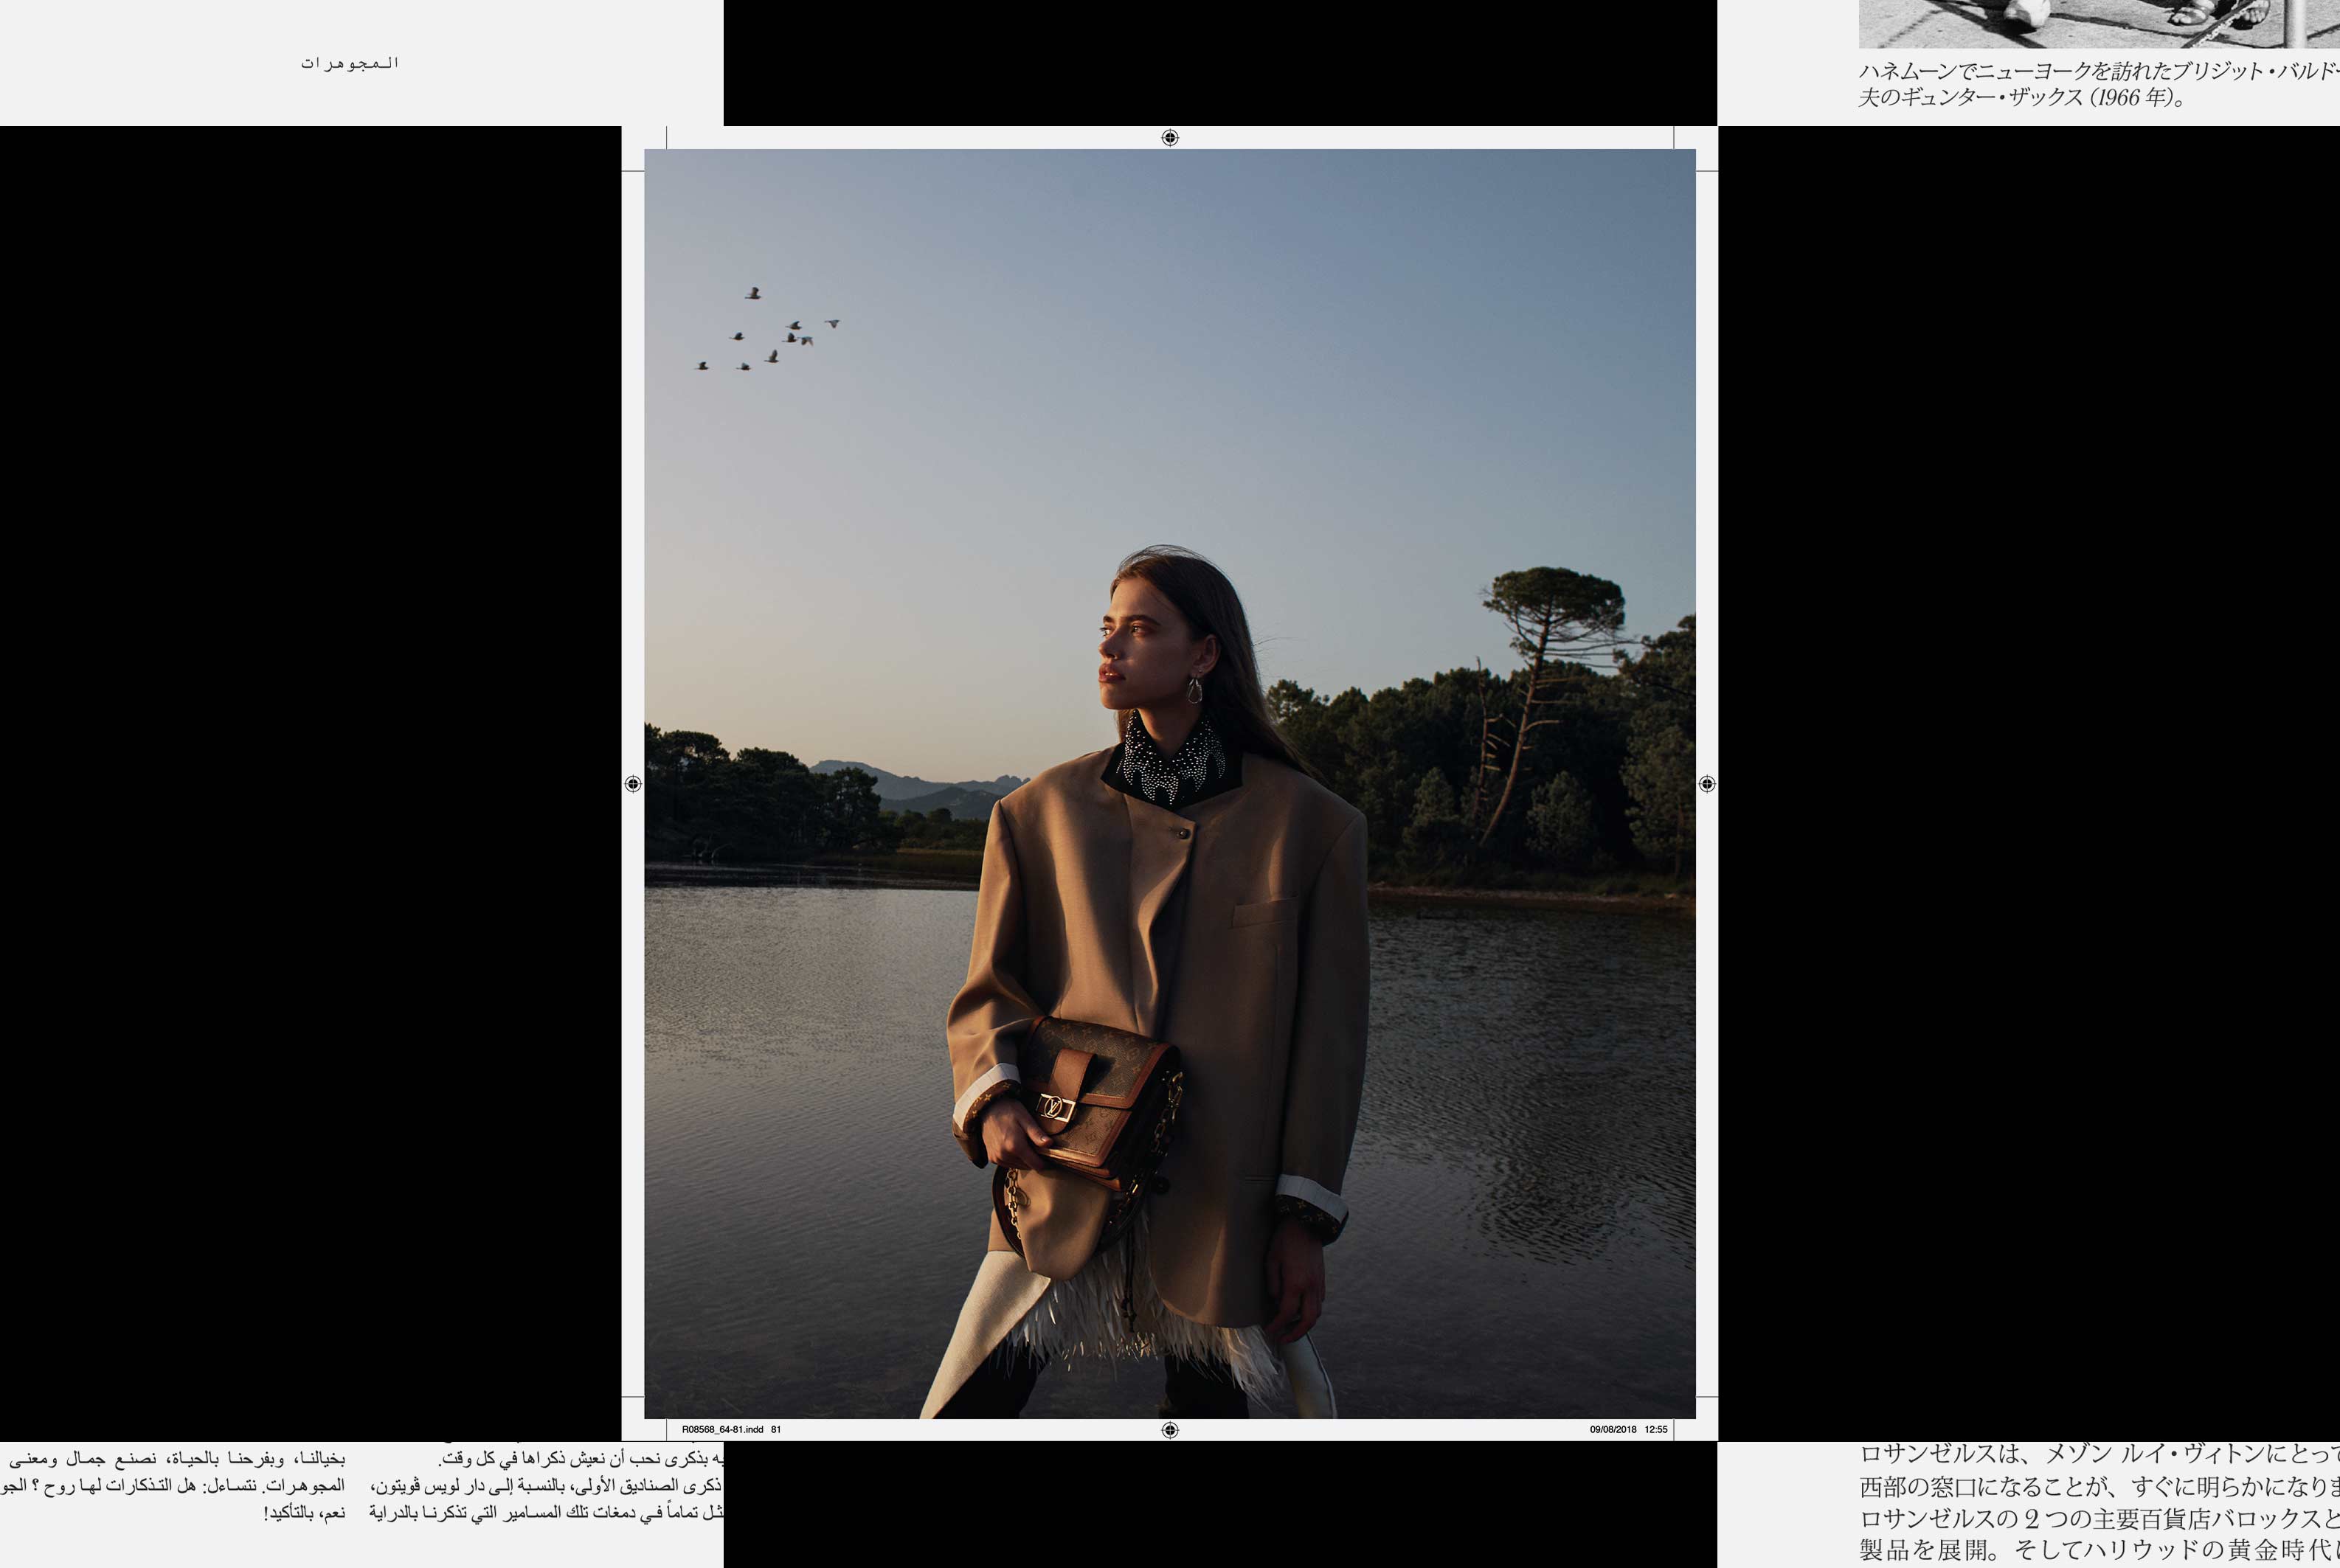 Studio Mitsu for Louis Vuitton, LV The Book #9. Art direction, graphic design, artwork.
Landscapes, travel, photography by Vincent Van de Wijngaard. Editorial design, layout, magazine, fashion.